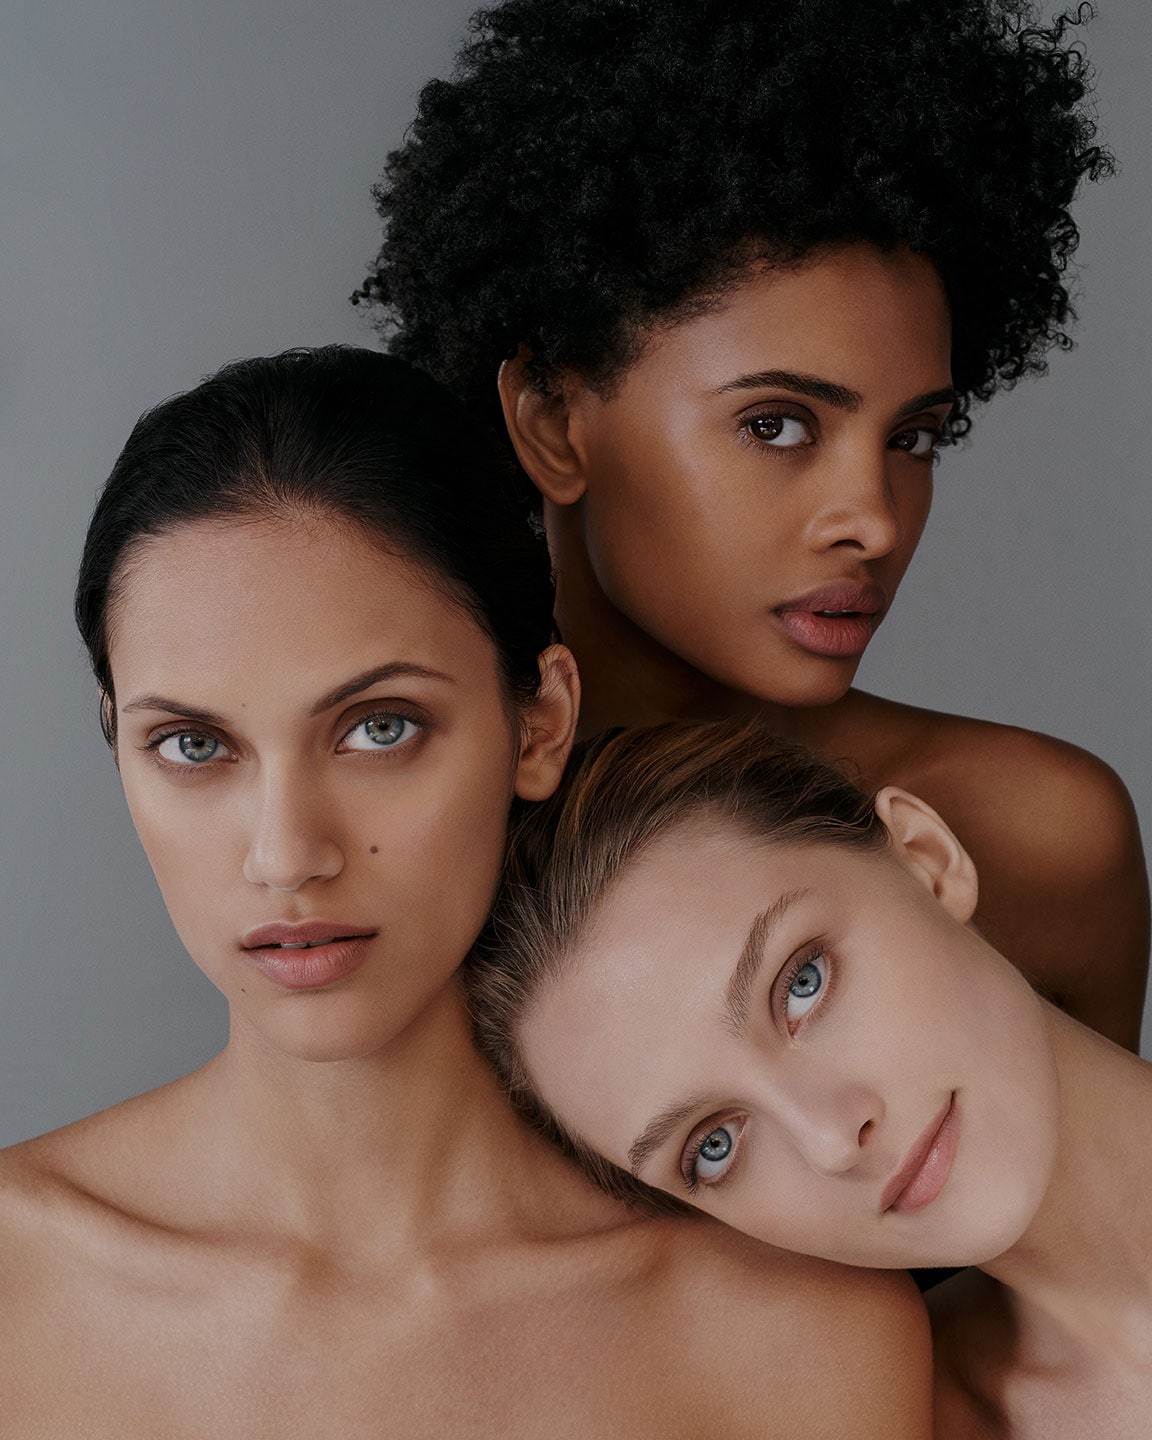 Estee Lauder | Beauty Products, Skin Care & Makeup